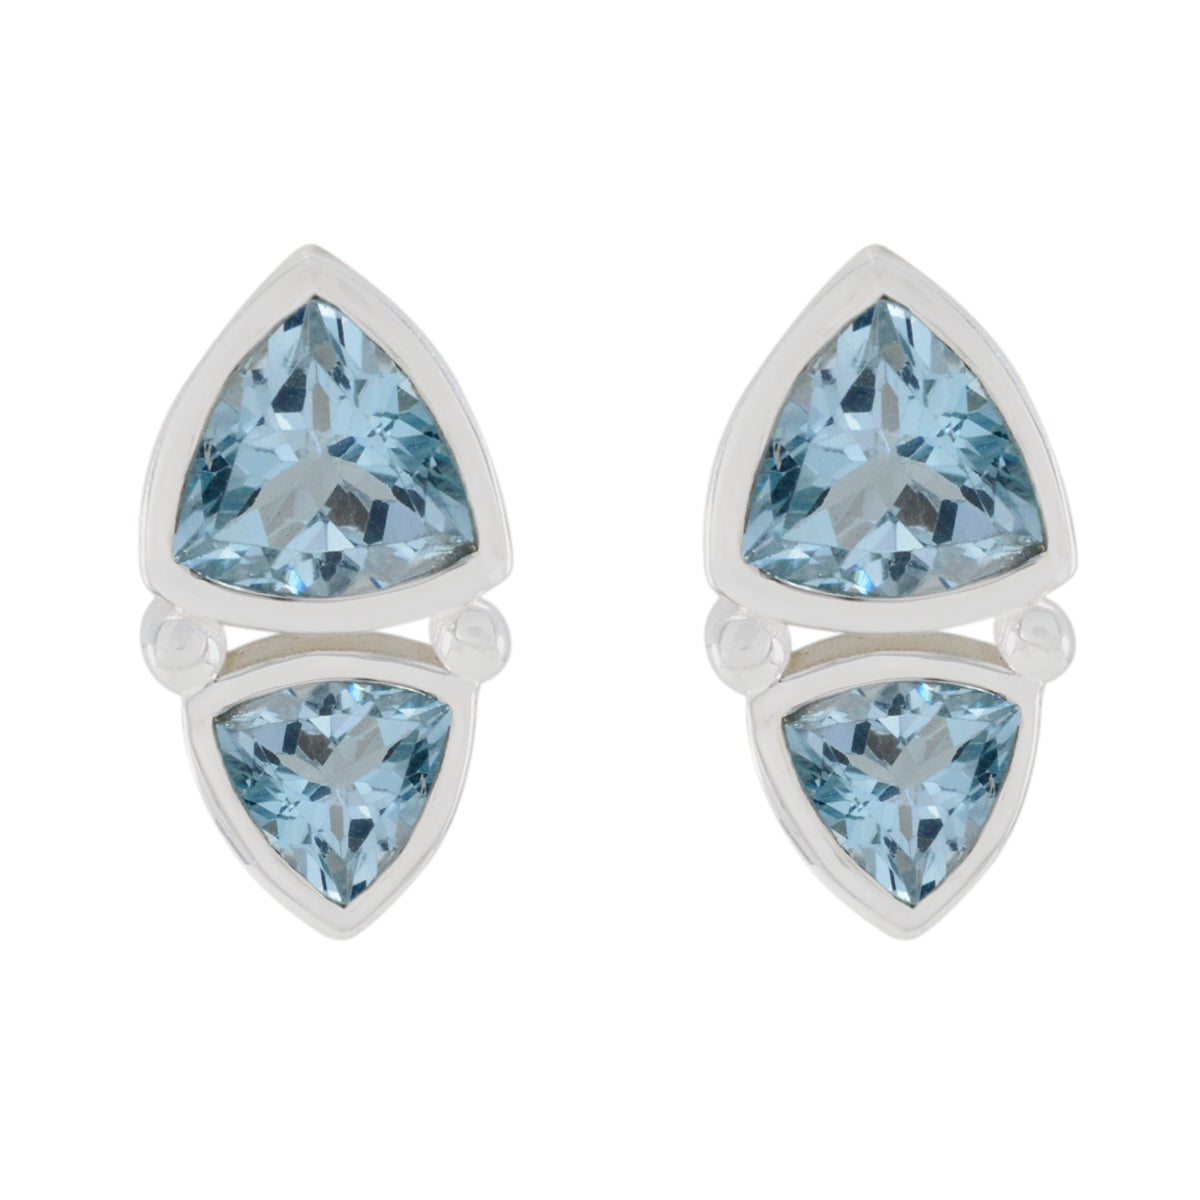 Riyo Glamorous Sterling Silver Earring For Lady Blue Topaz Earring Bezel Setting Blue Earring Stud Earring